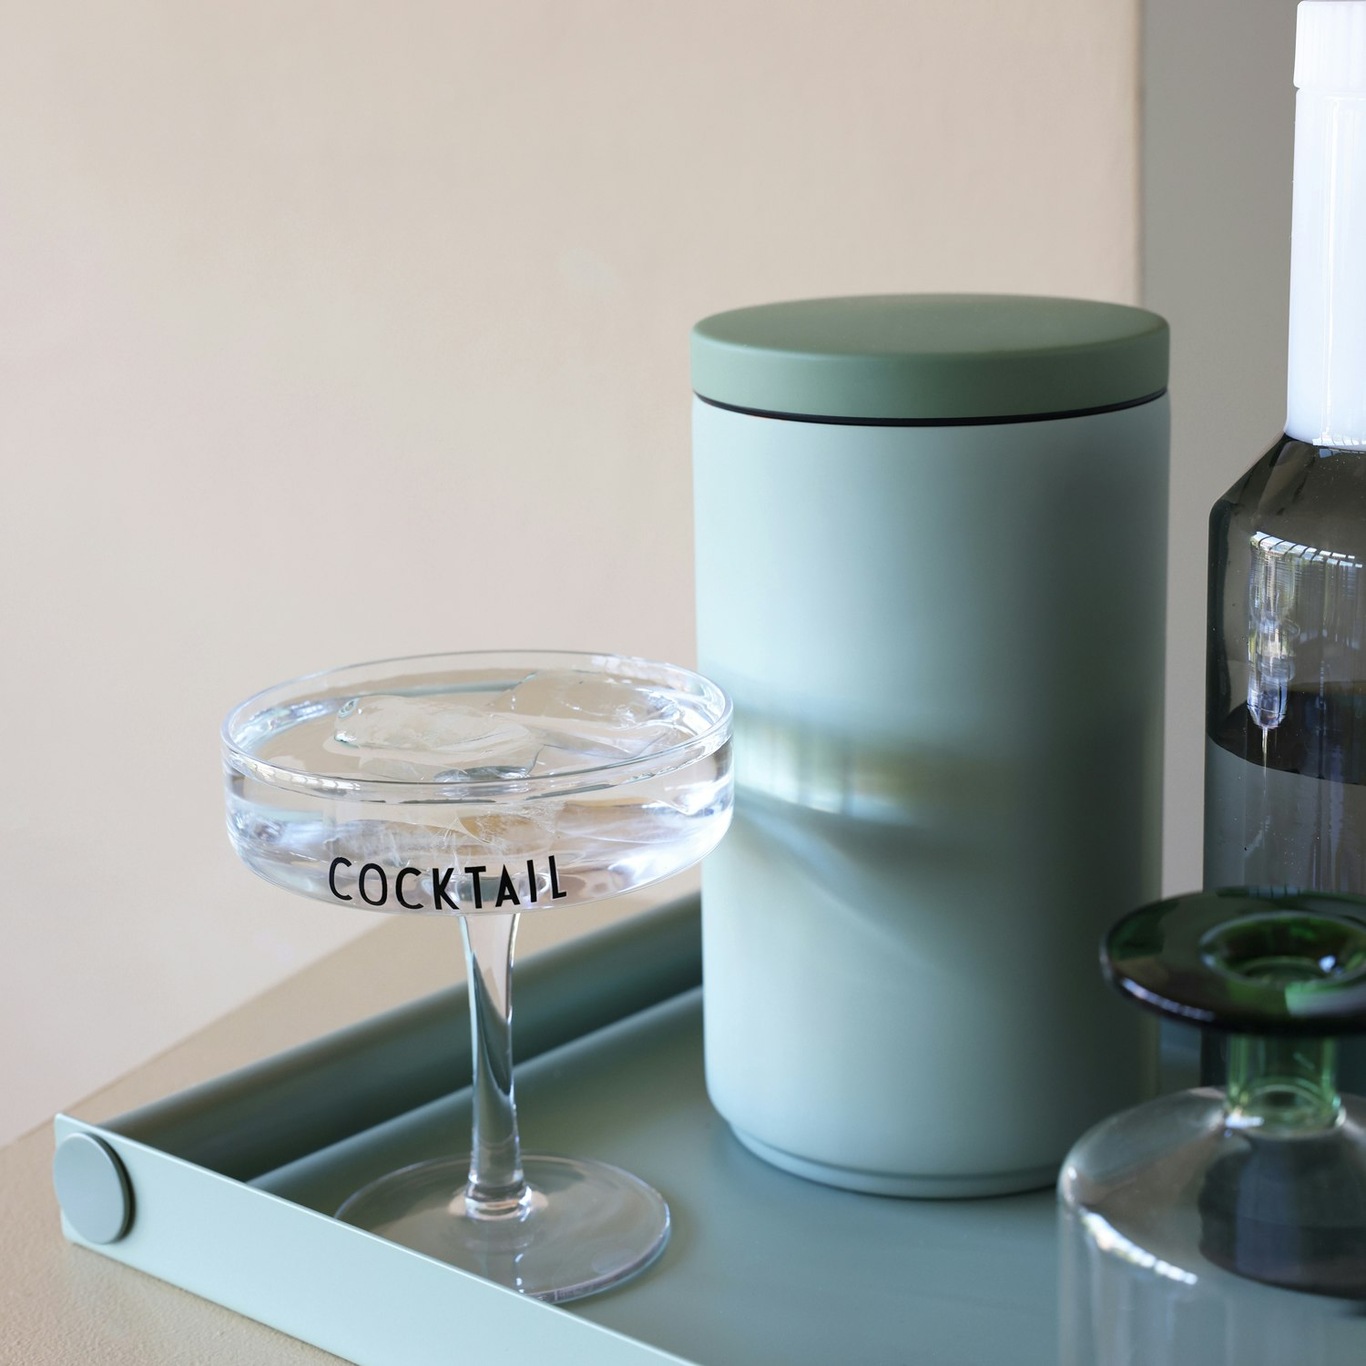 https://royaldesign.com/image/2/design-letters-ice-bucket-wine-cooler-green-4?w=800&quality=80